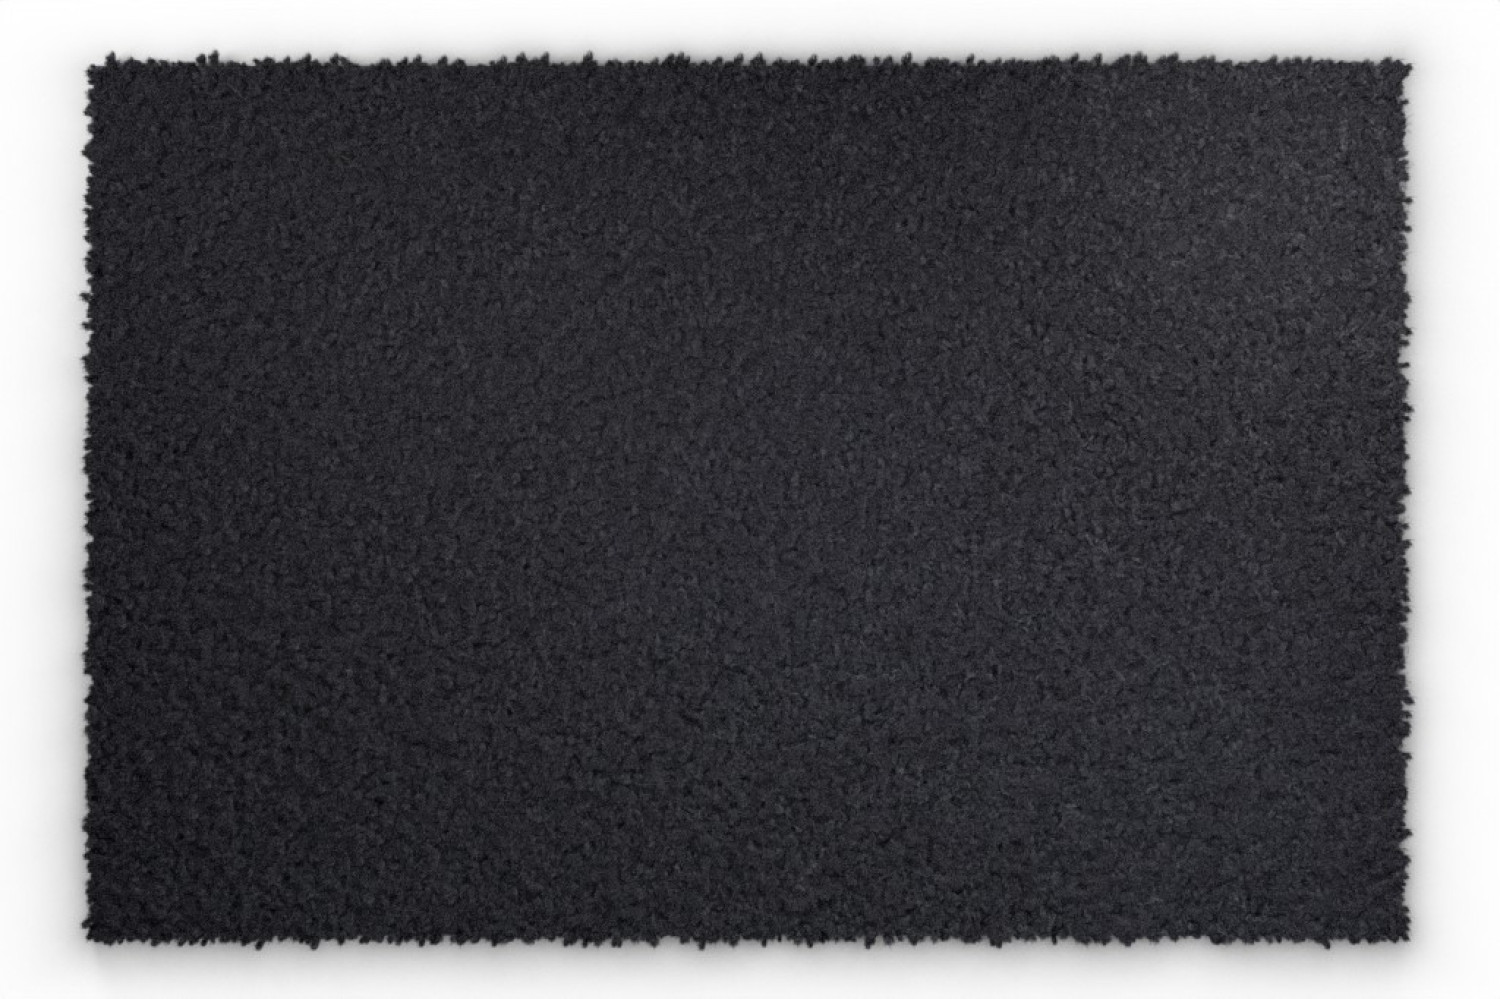 ENTRADA Kokosmatte schwarz 007 80 cm